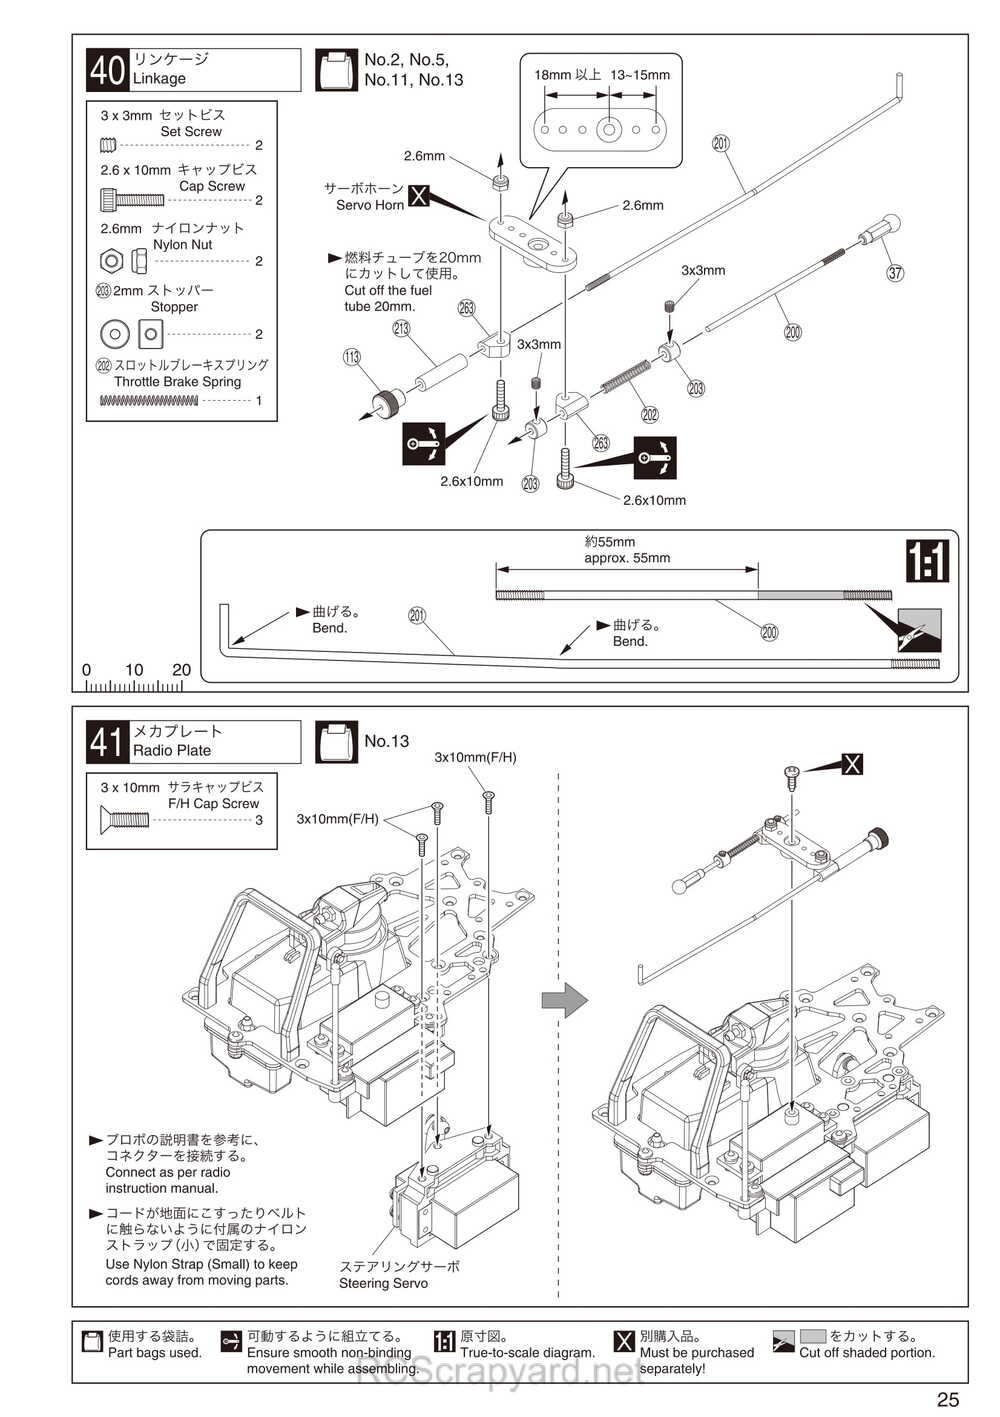 Kyosho - 31263 - V-One RRR Evo2 WC - Manual - Page 25